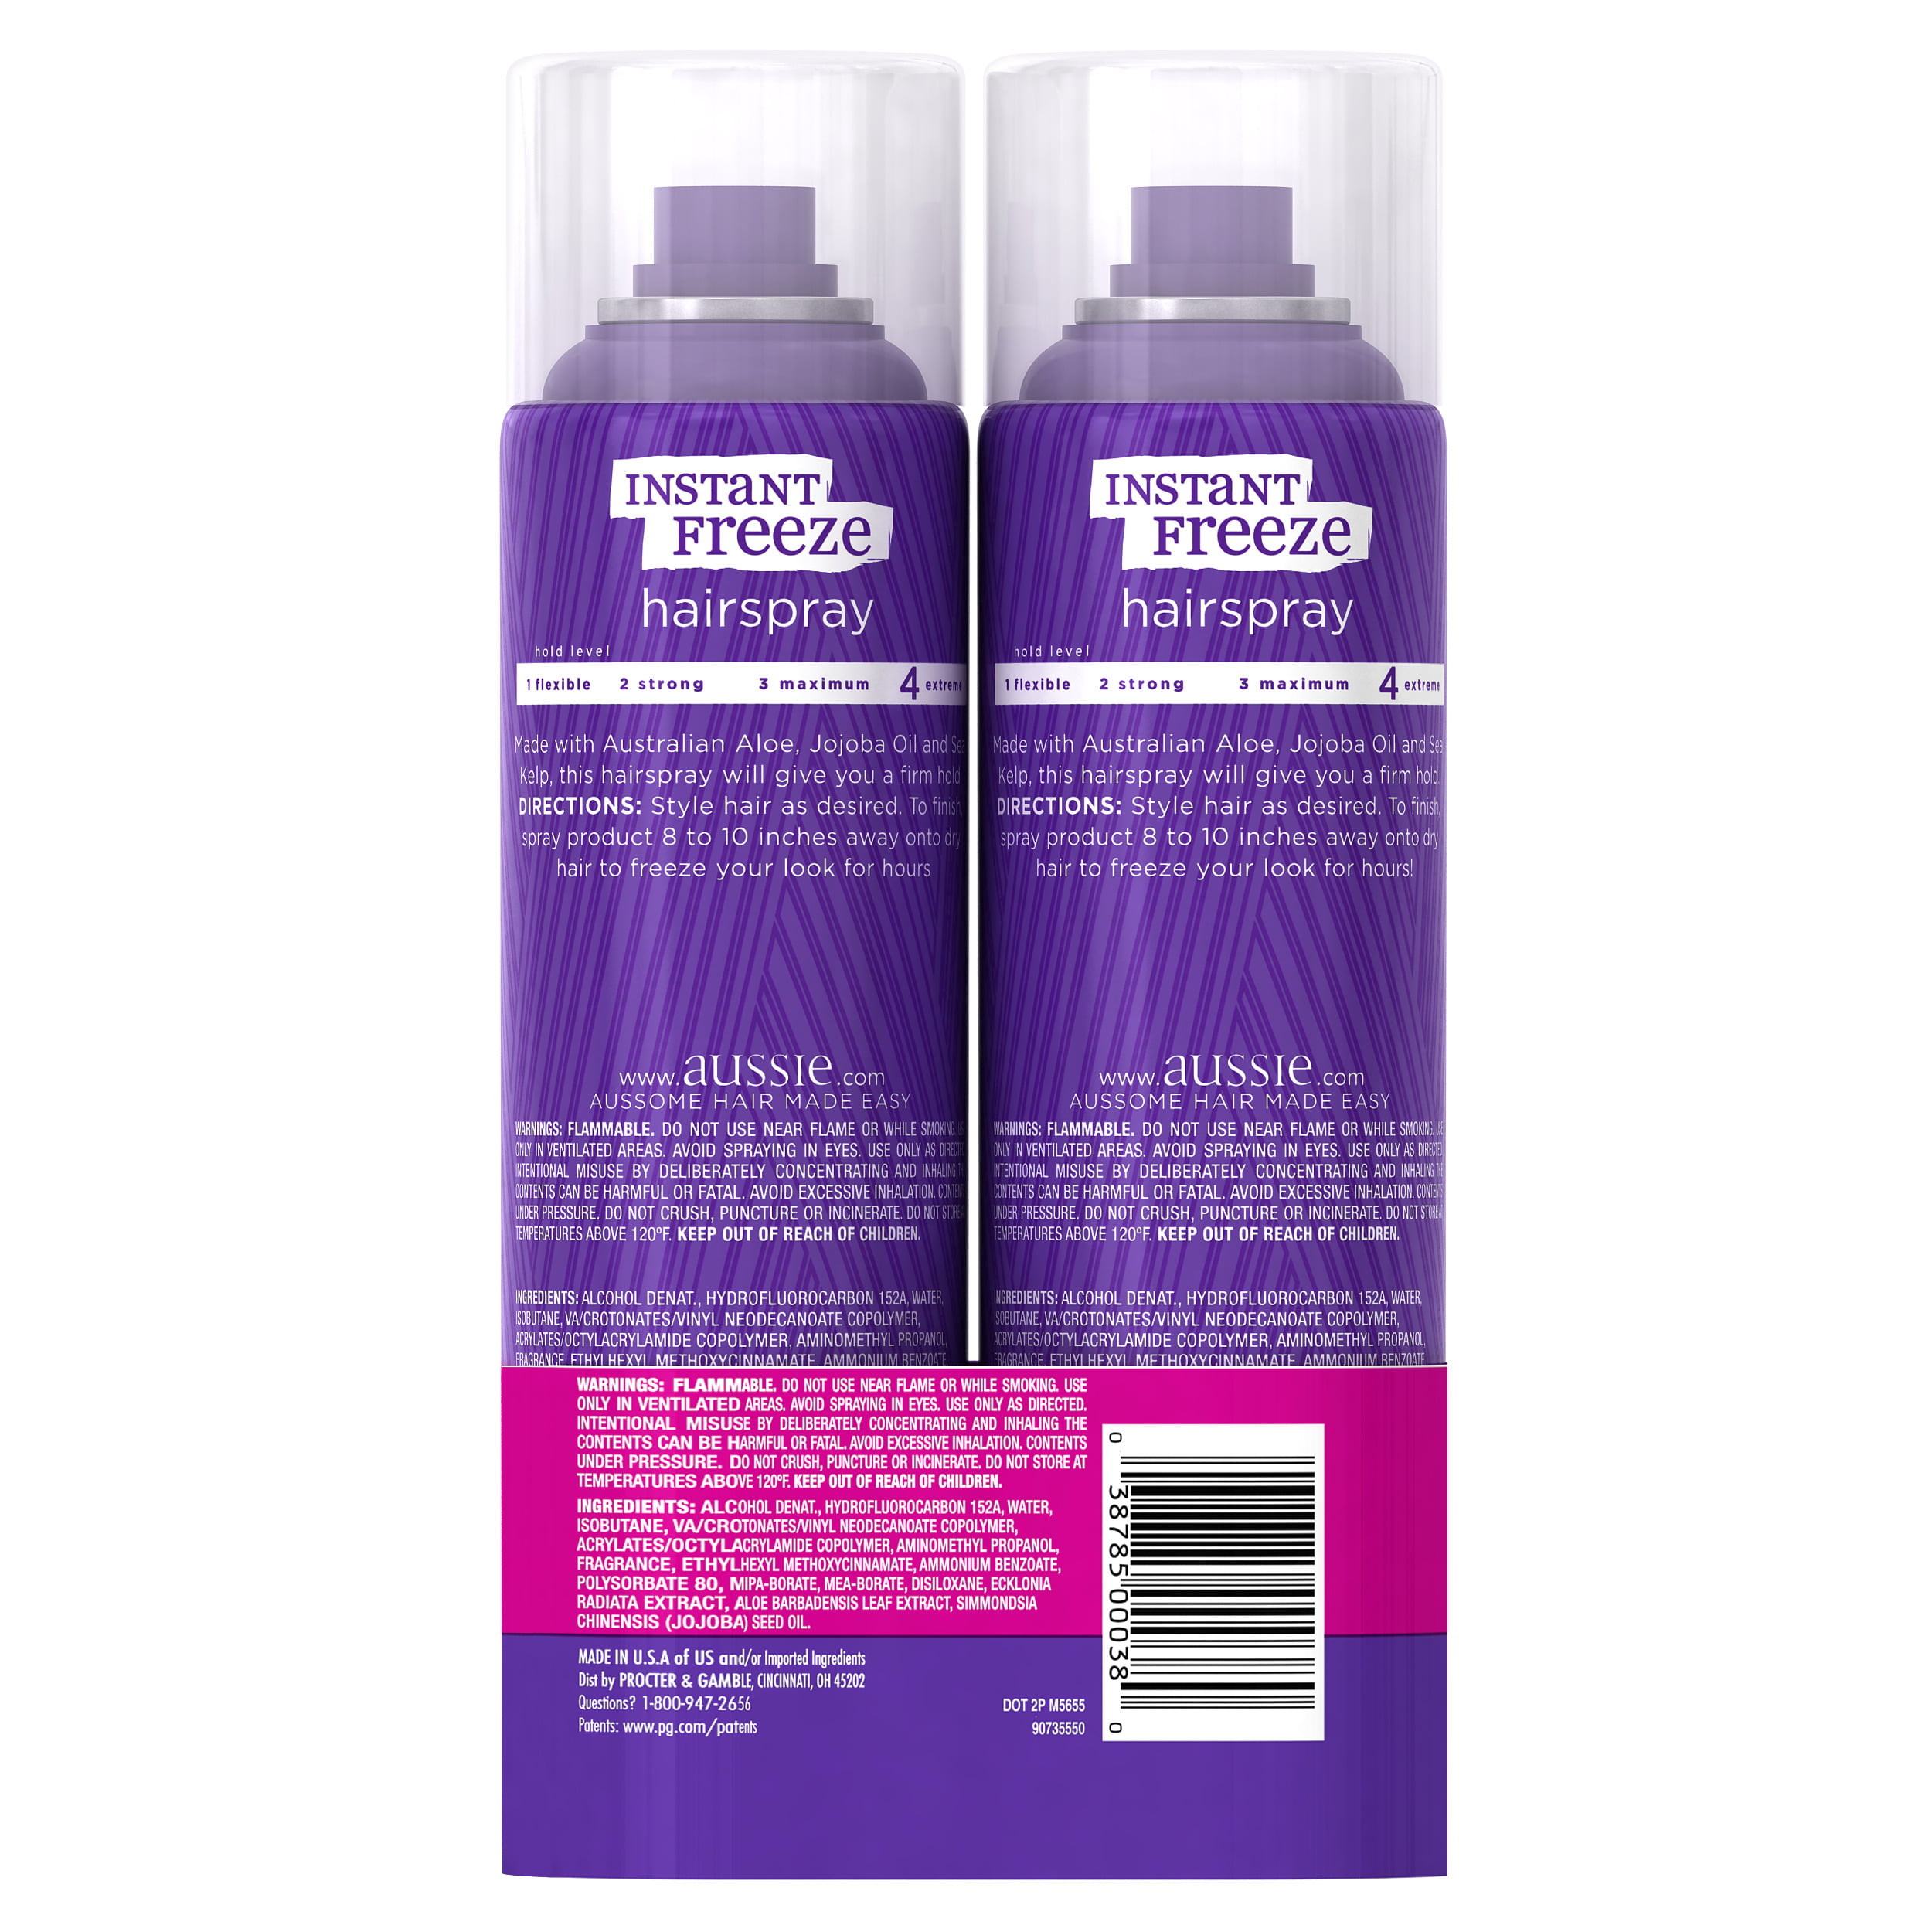 Aussie Instant Freeze Hairspray reviews in Hairspray - ChickAdvisor